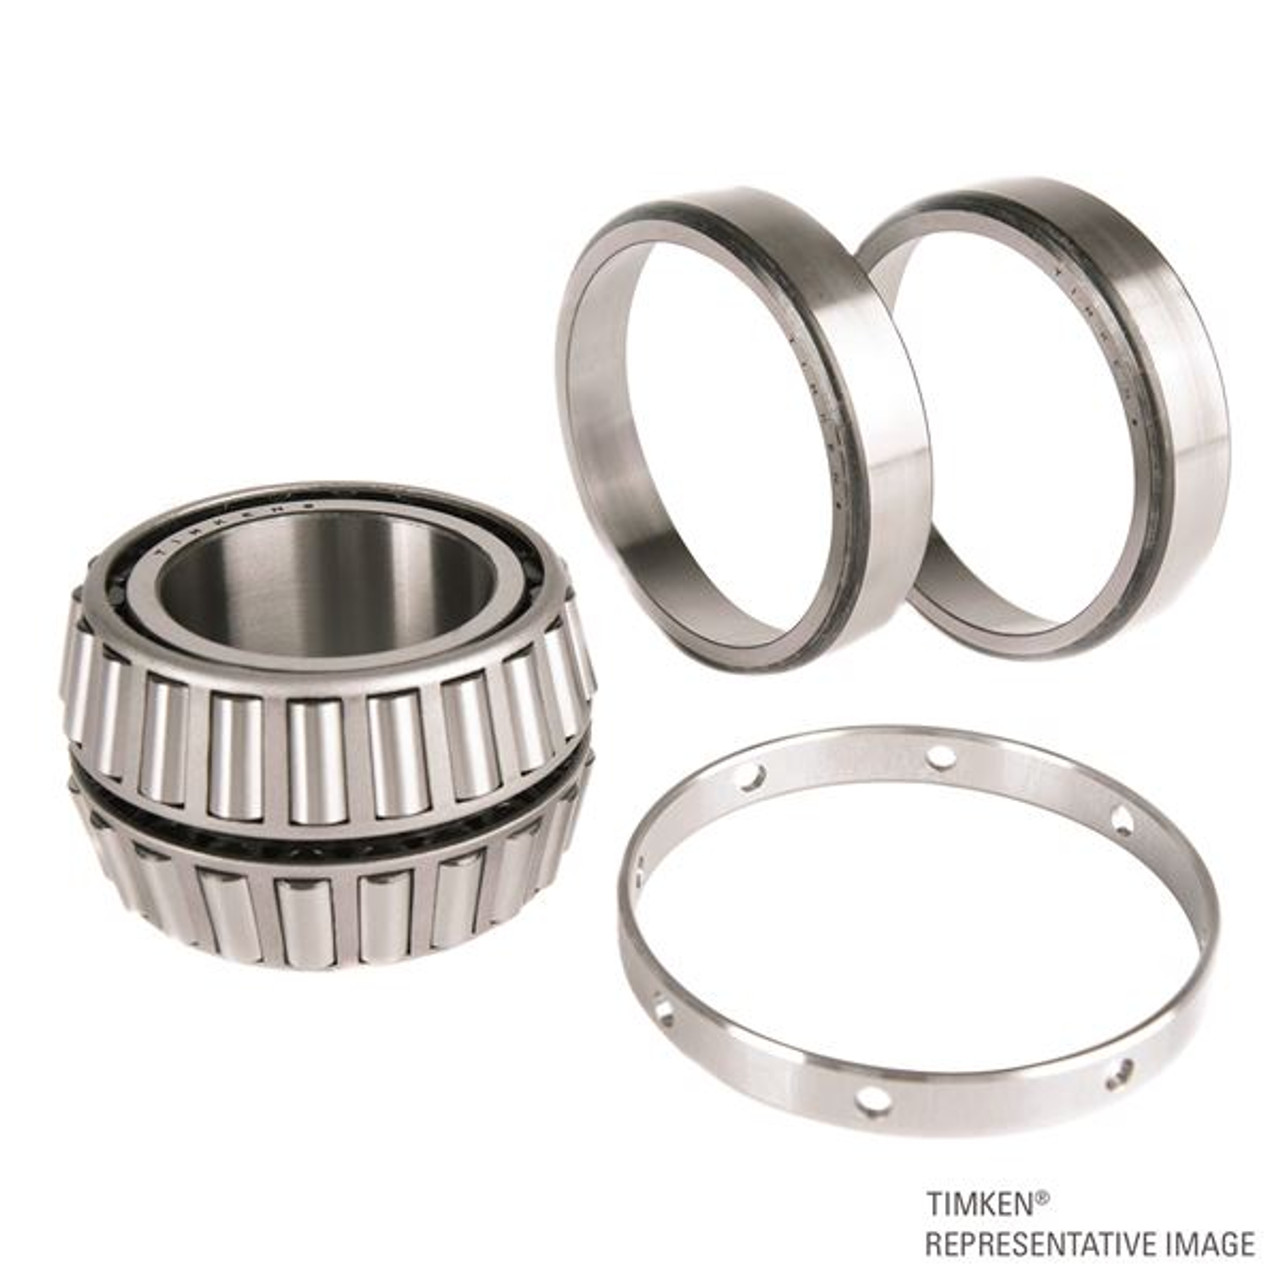 Timken® TDI Single Double Cone Assembly  HM926749-90069